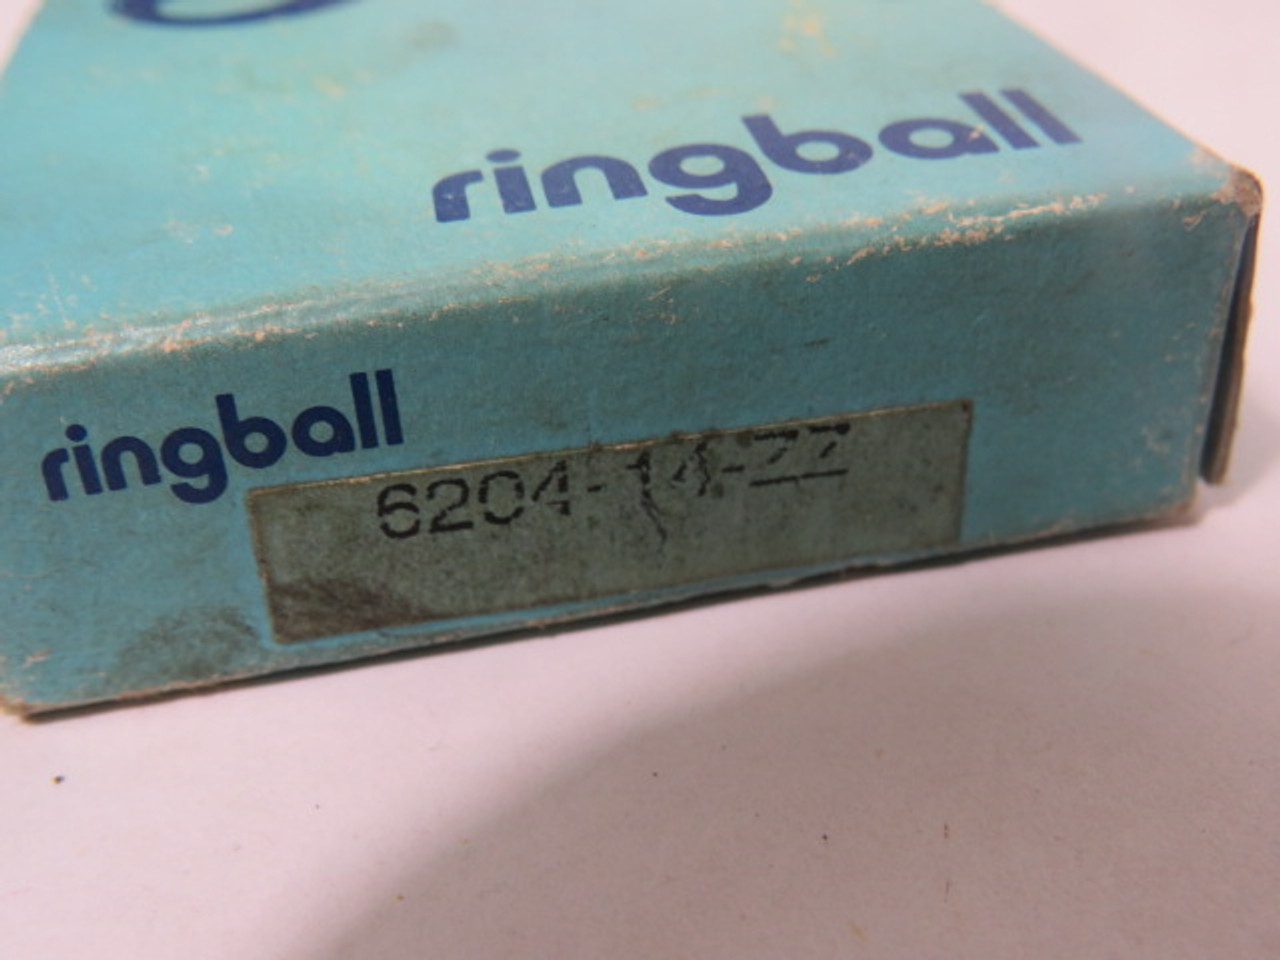 Ringball 6204-14-ZZ Shielded Ball Bearing 47mmOD 20mmID 14mmW ! NEW !